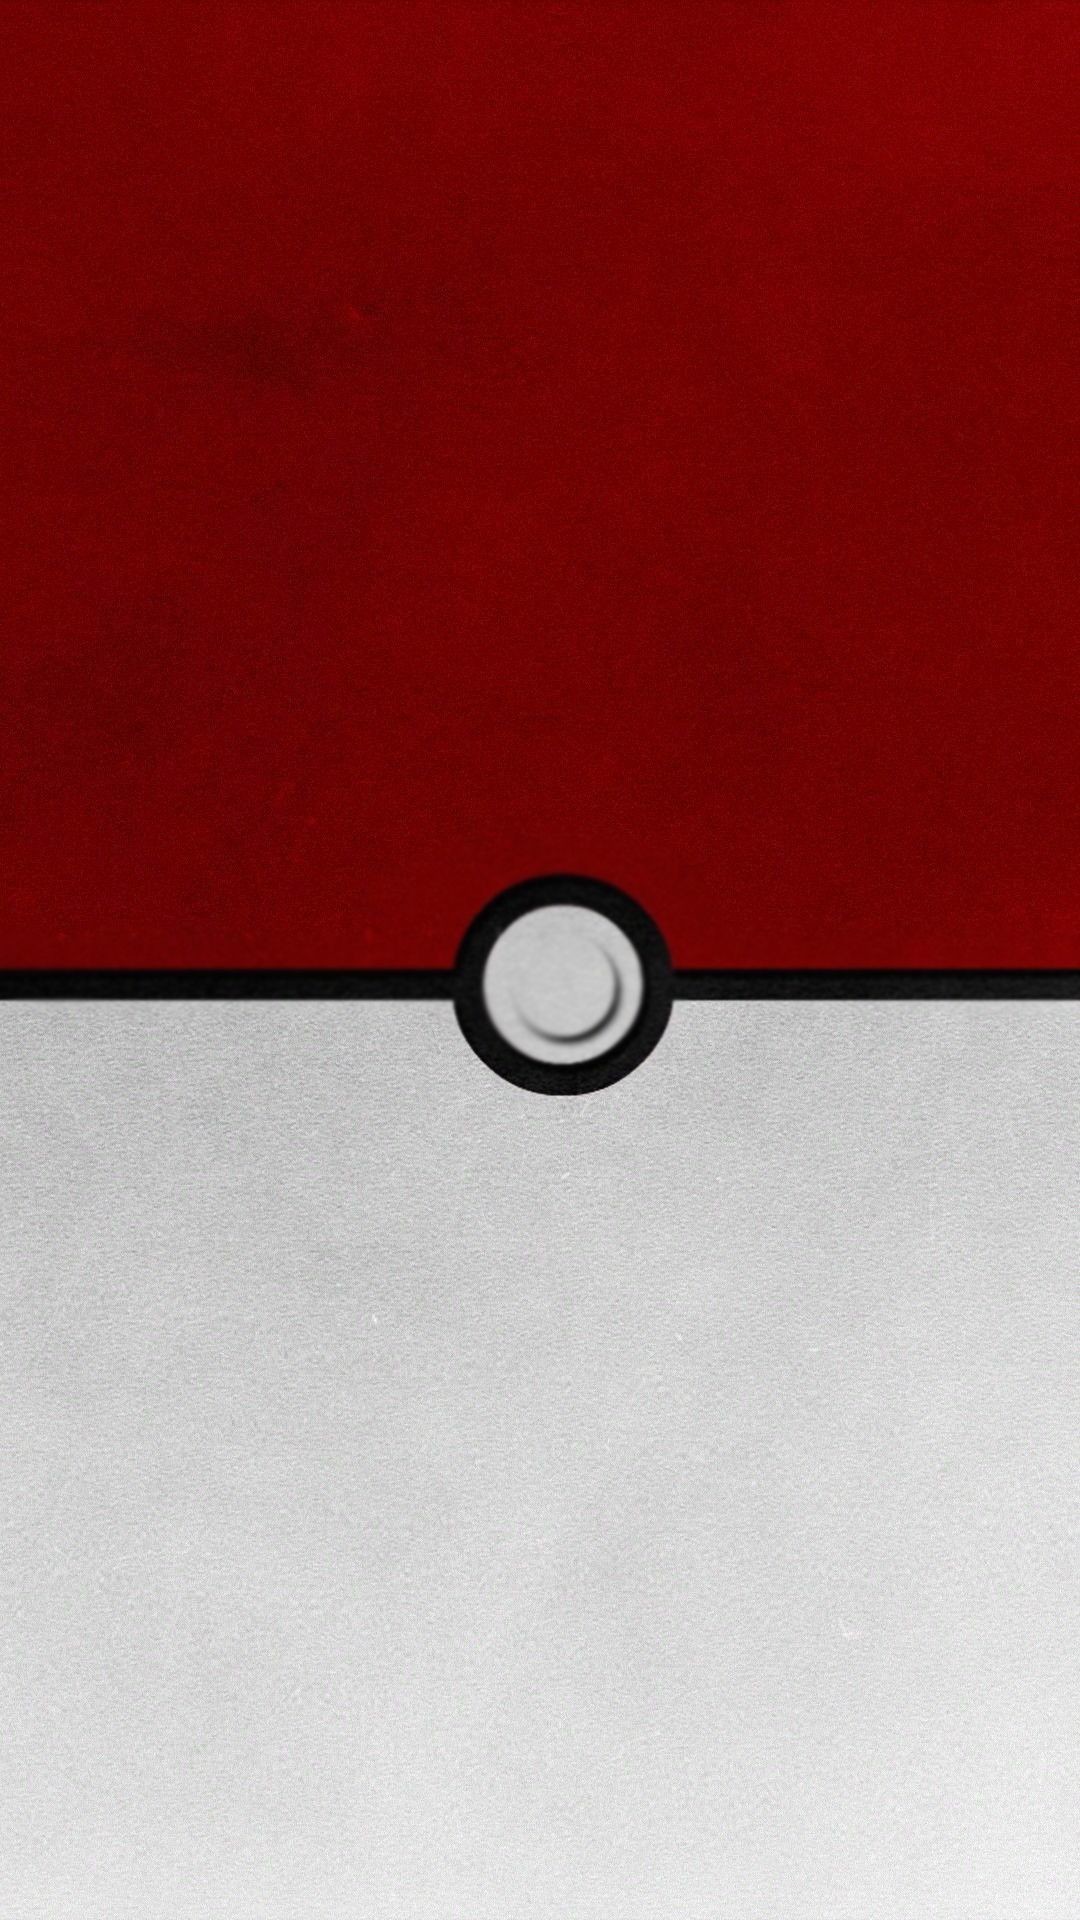 Pokemon Master Ball iPhone 6 HD Wallpaper –